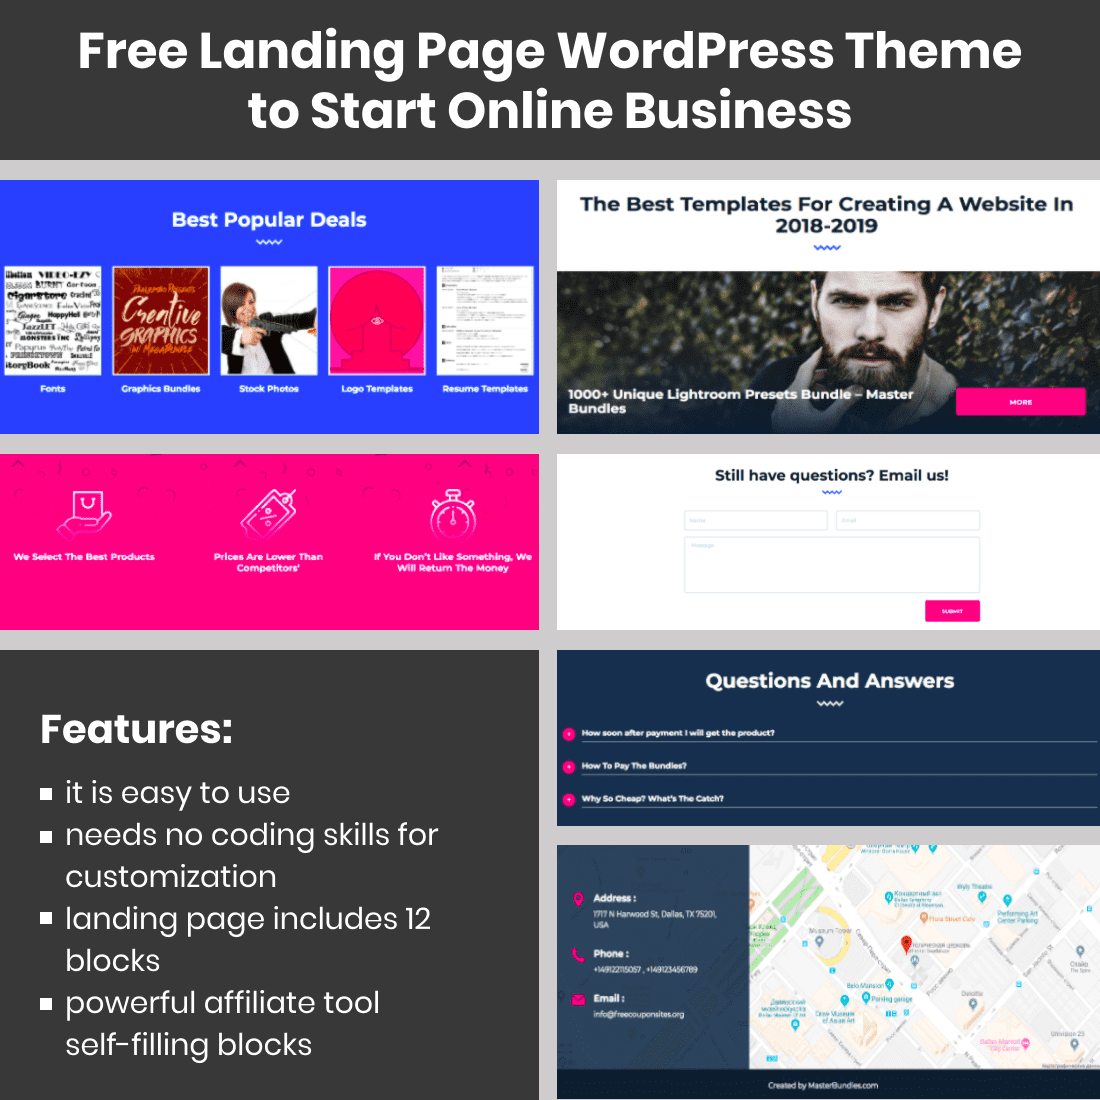 Free Landing Page WordPress Theme to Start Online Business